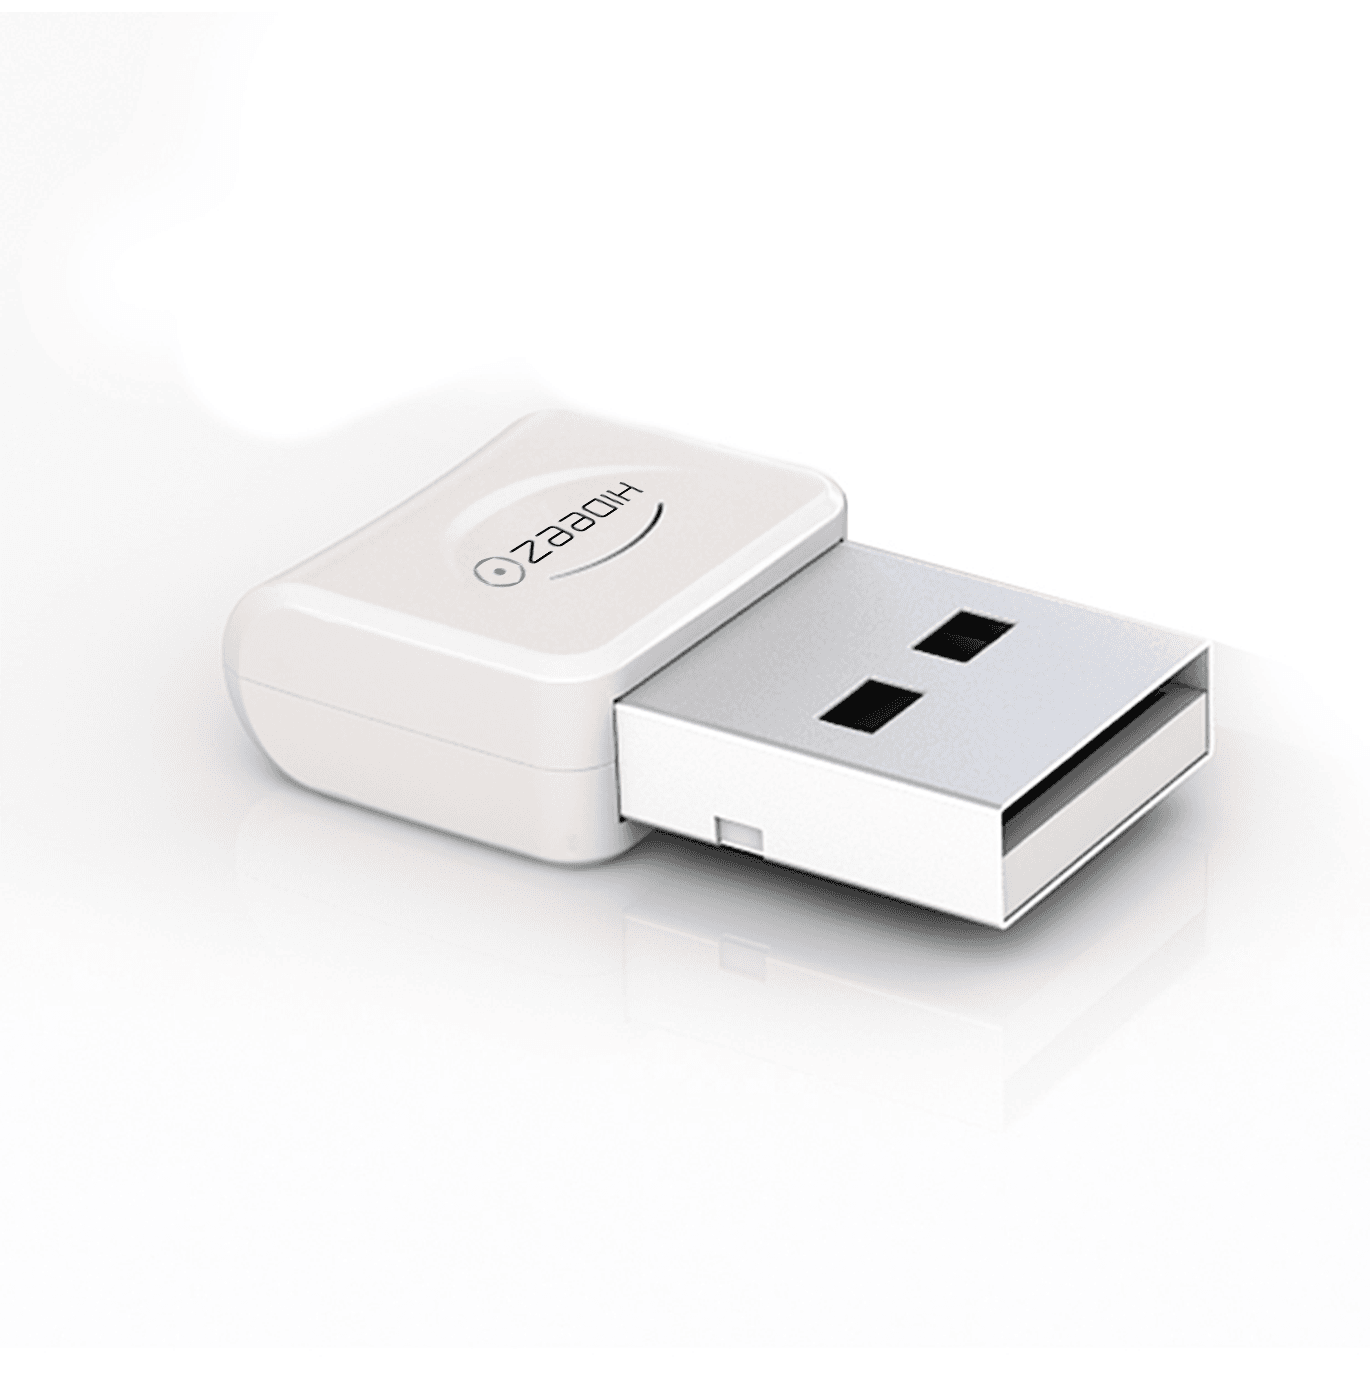 Recomendado cola Bañera Hideez USB Bluetooth Adapter for Windows, macOS, Linux, Raspberry Pi